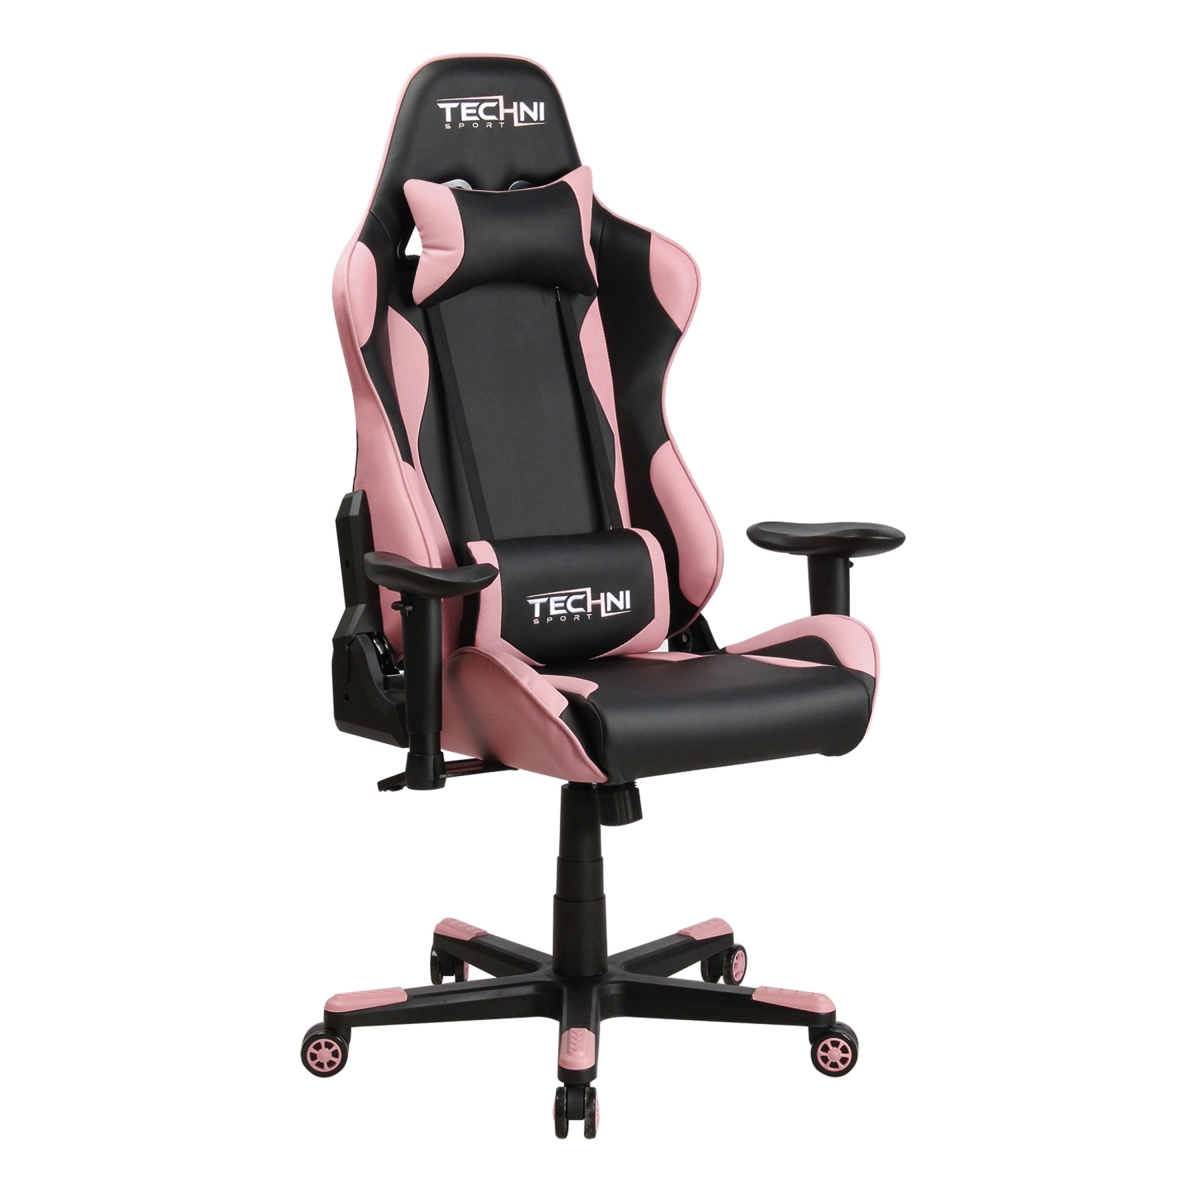 Rta-ts43-pnk Ts-4300 Ergonomic High Back Racer Style Pc Gaming Chair, Pink